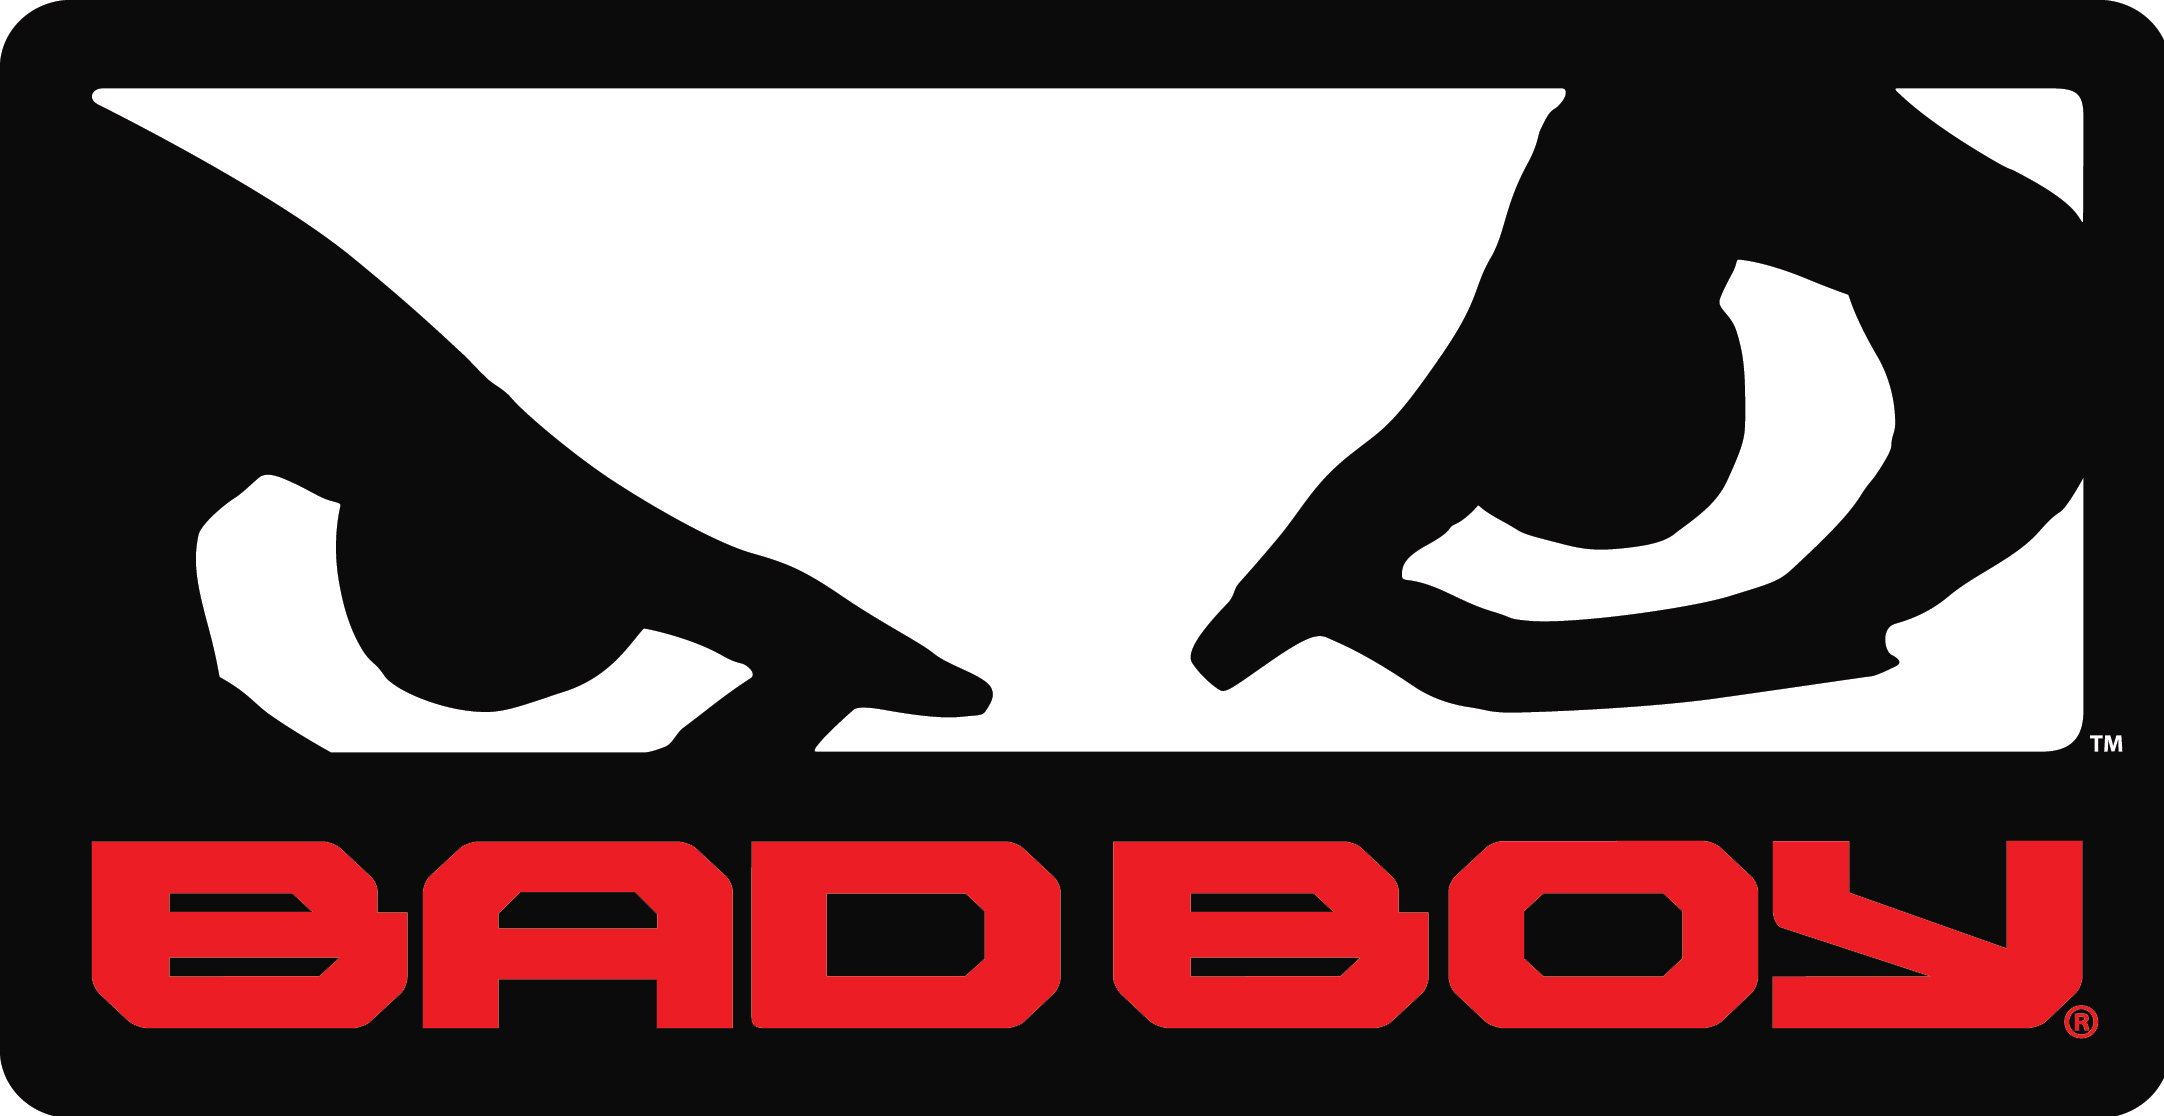 Free download Bad Boy Mma Logo for [2164x1116] for your Desktop, Mobile & Tablet. Explore Bad Boy MMA Wallpaper. Bad Boy MMA Wallpaper, Bad Boy Wallpaper, Mma Wallpaper